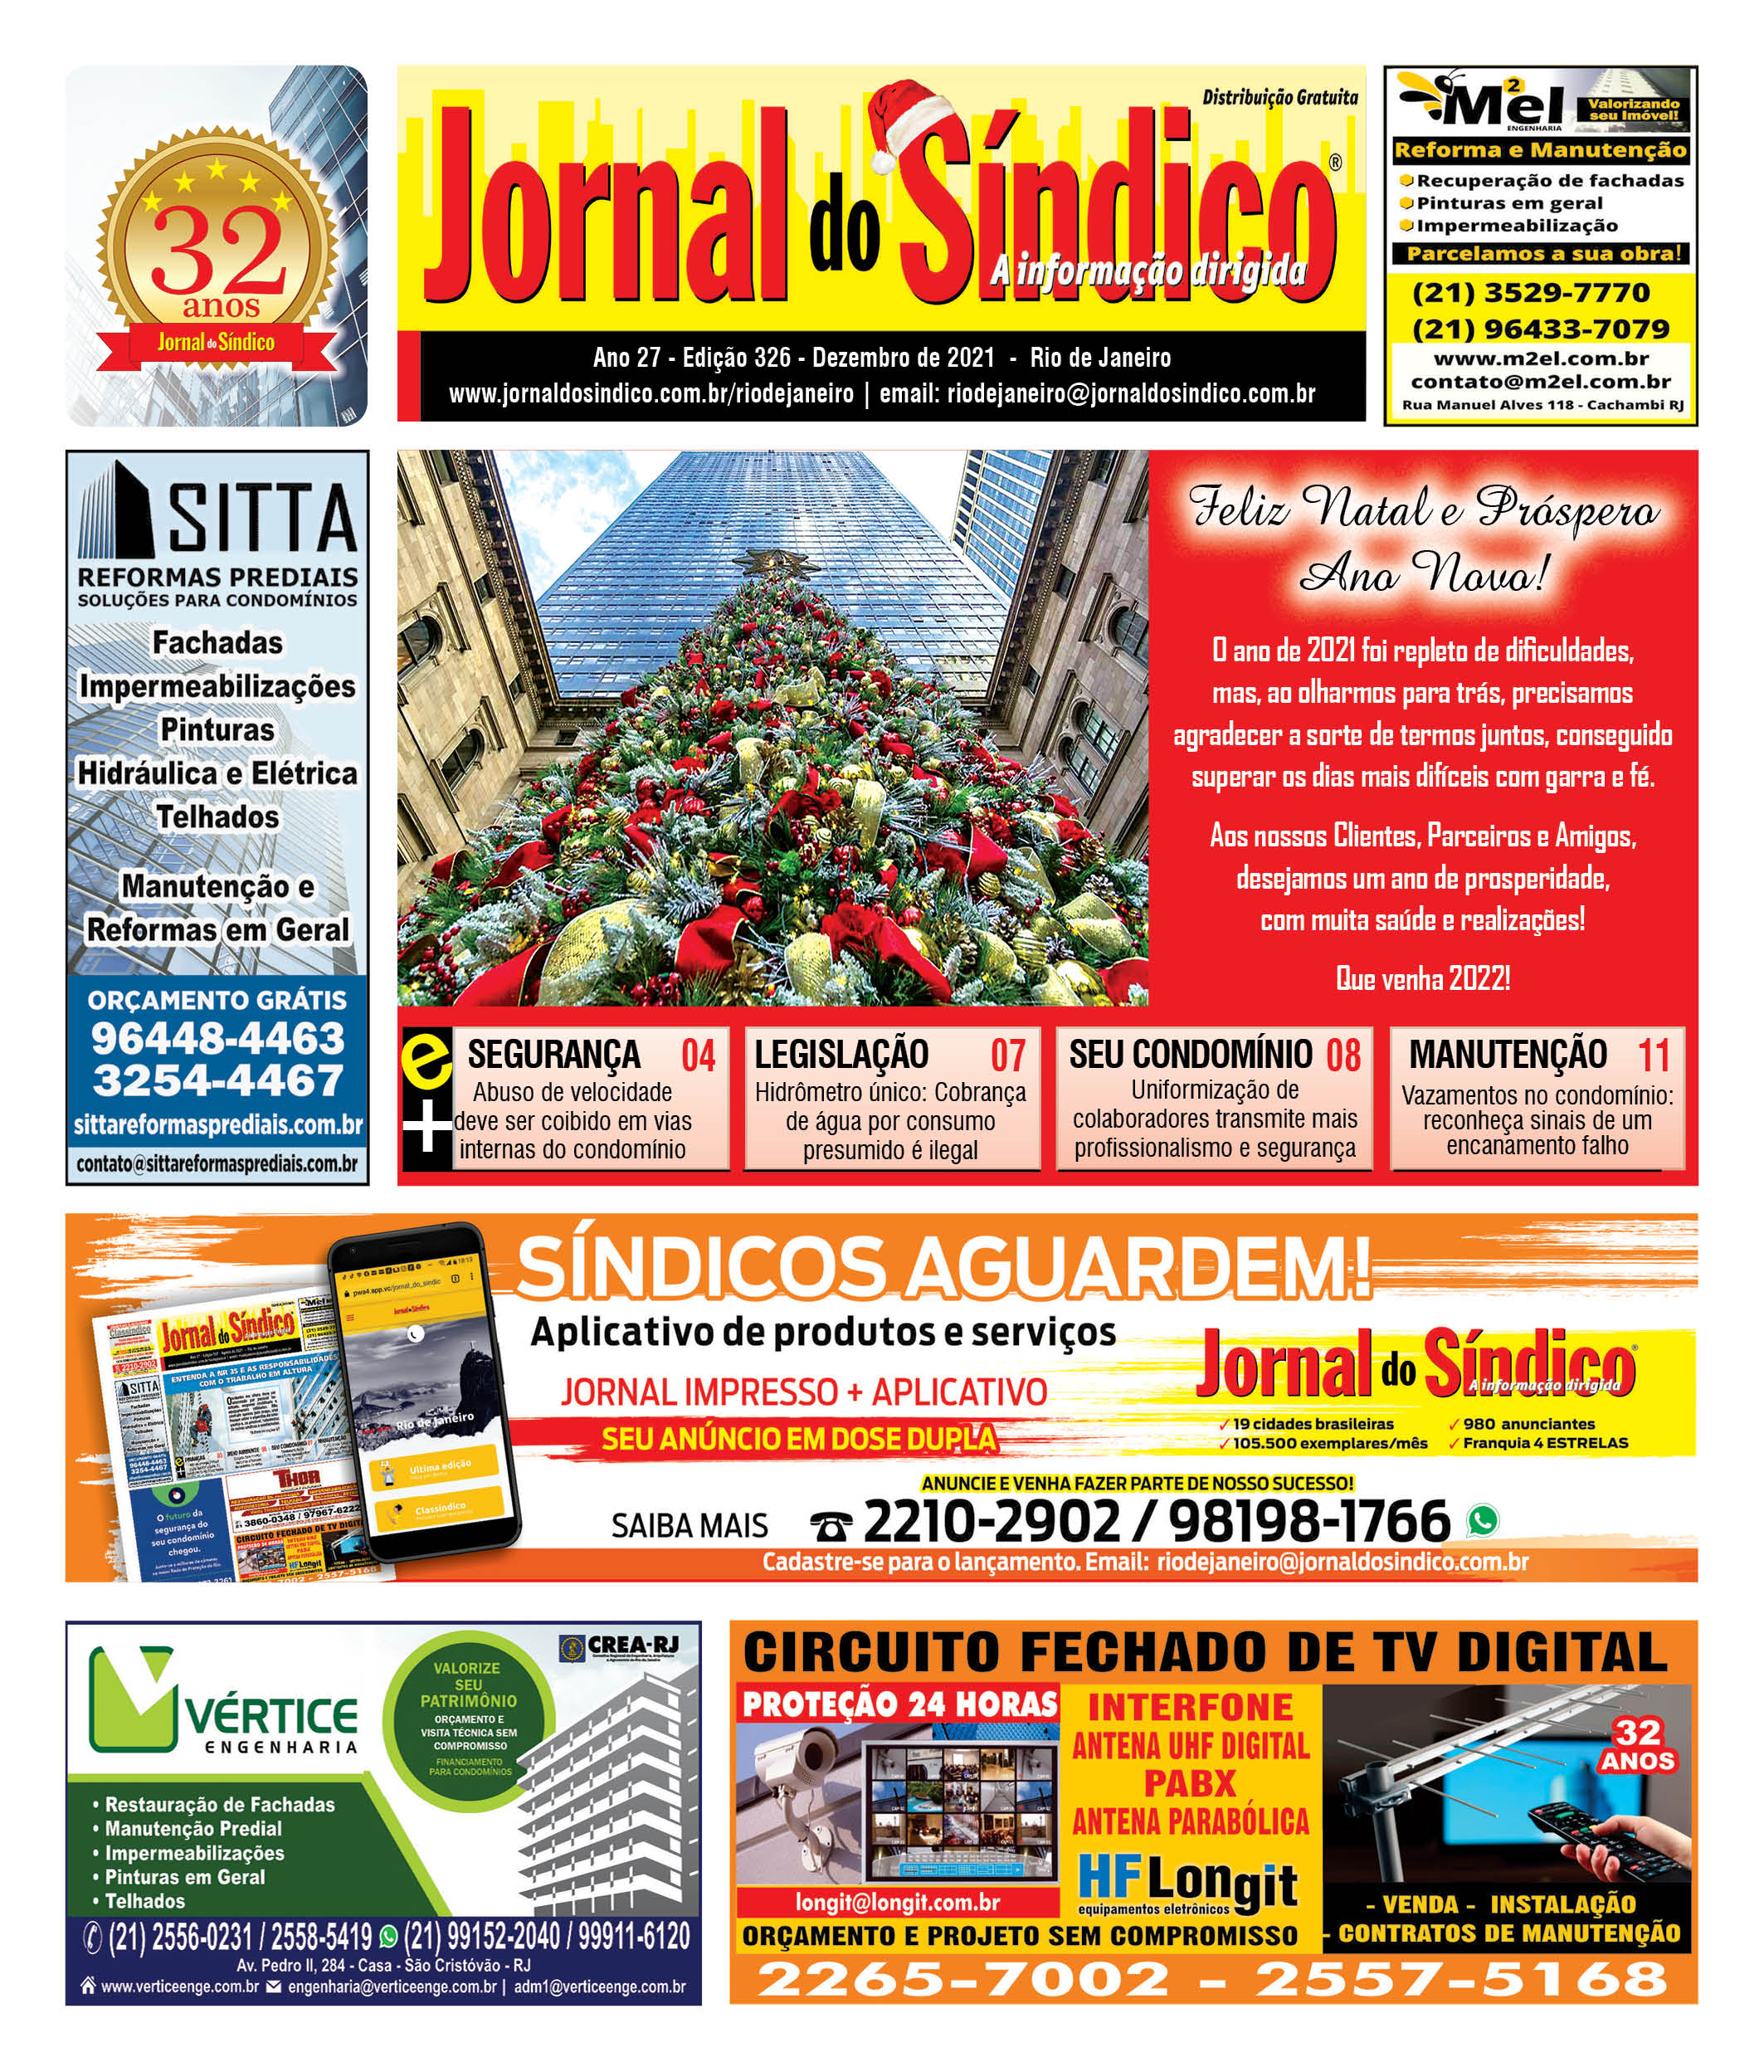 JSRJ 326 - DEZEMBRO 2021 - 12 paginas_Tribuna_WEB